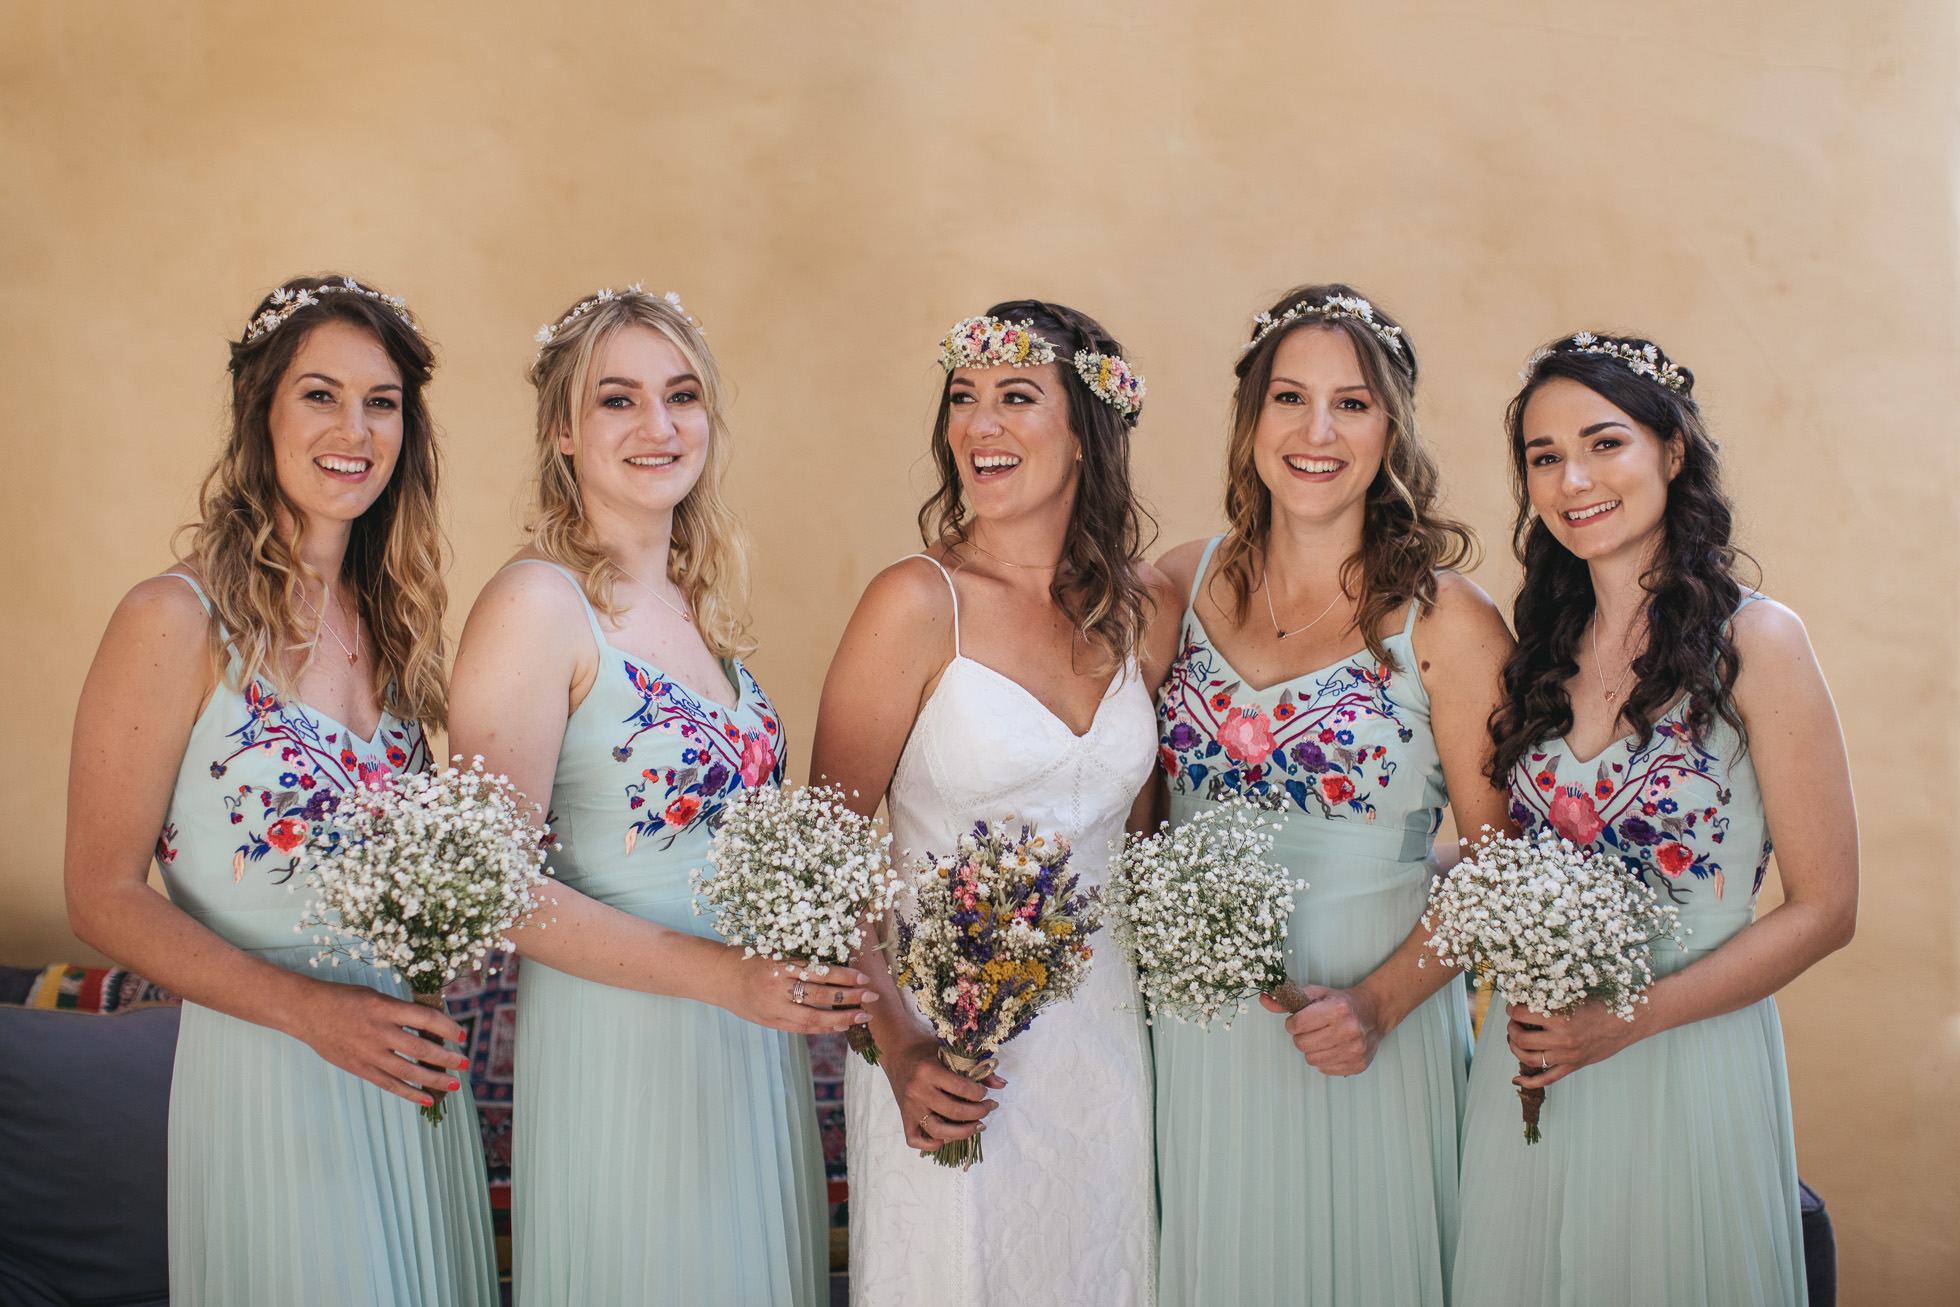 Group shot of bride and bridesmaids 